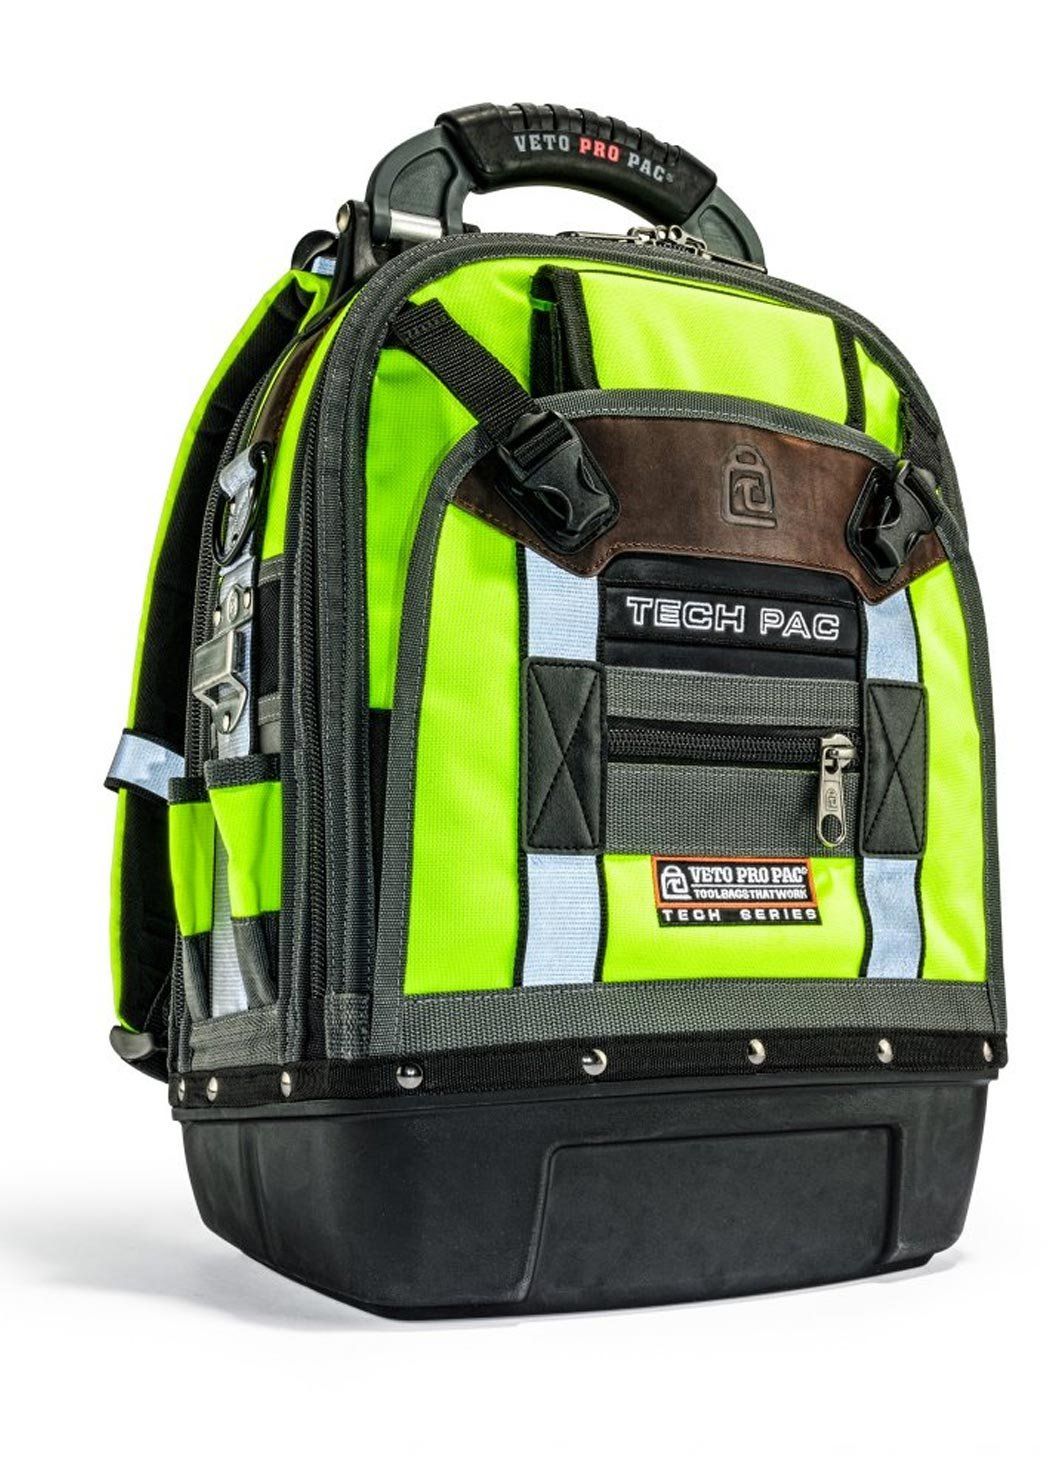 Veto Pro Pac Tech Pac Backpack Tool Bag 